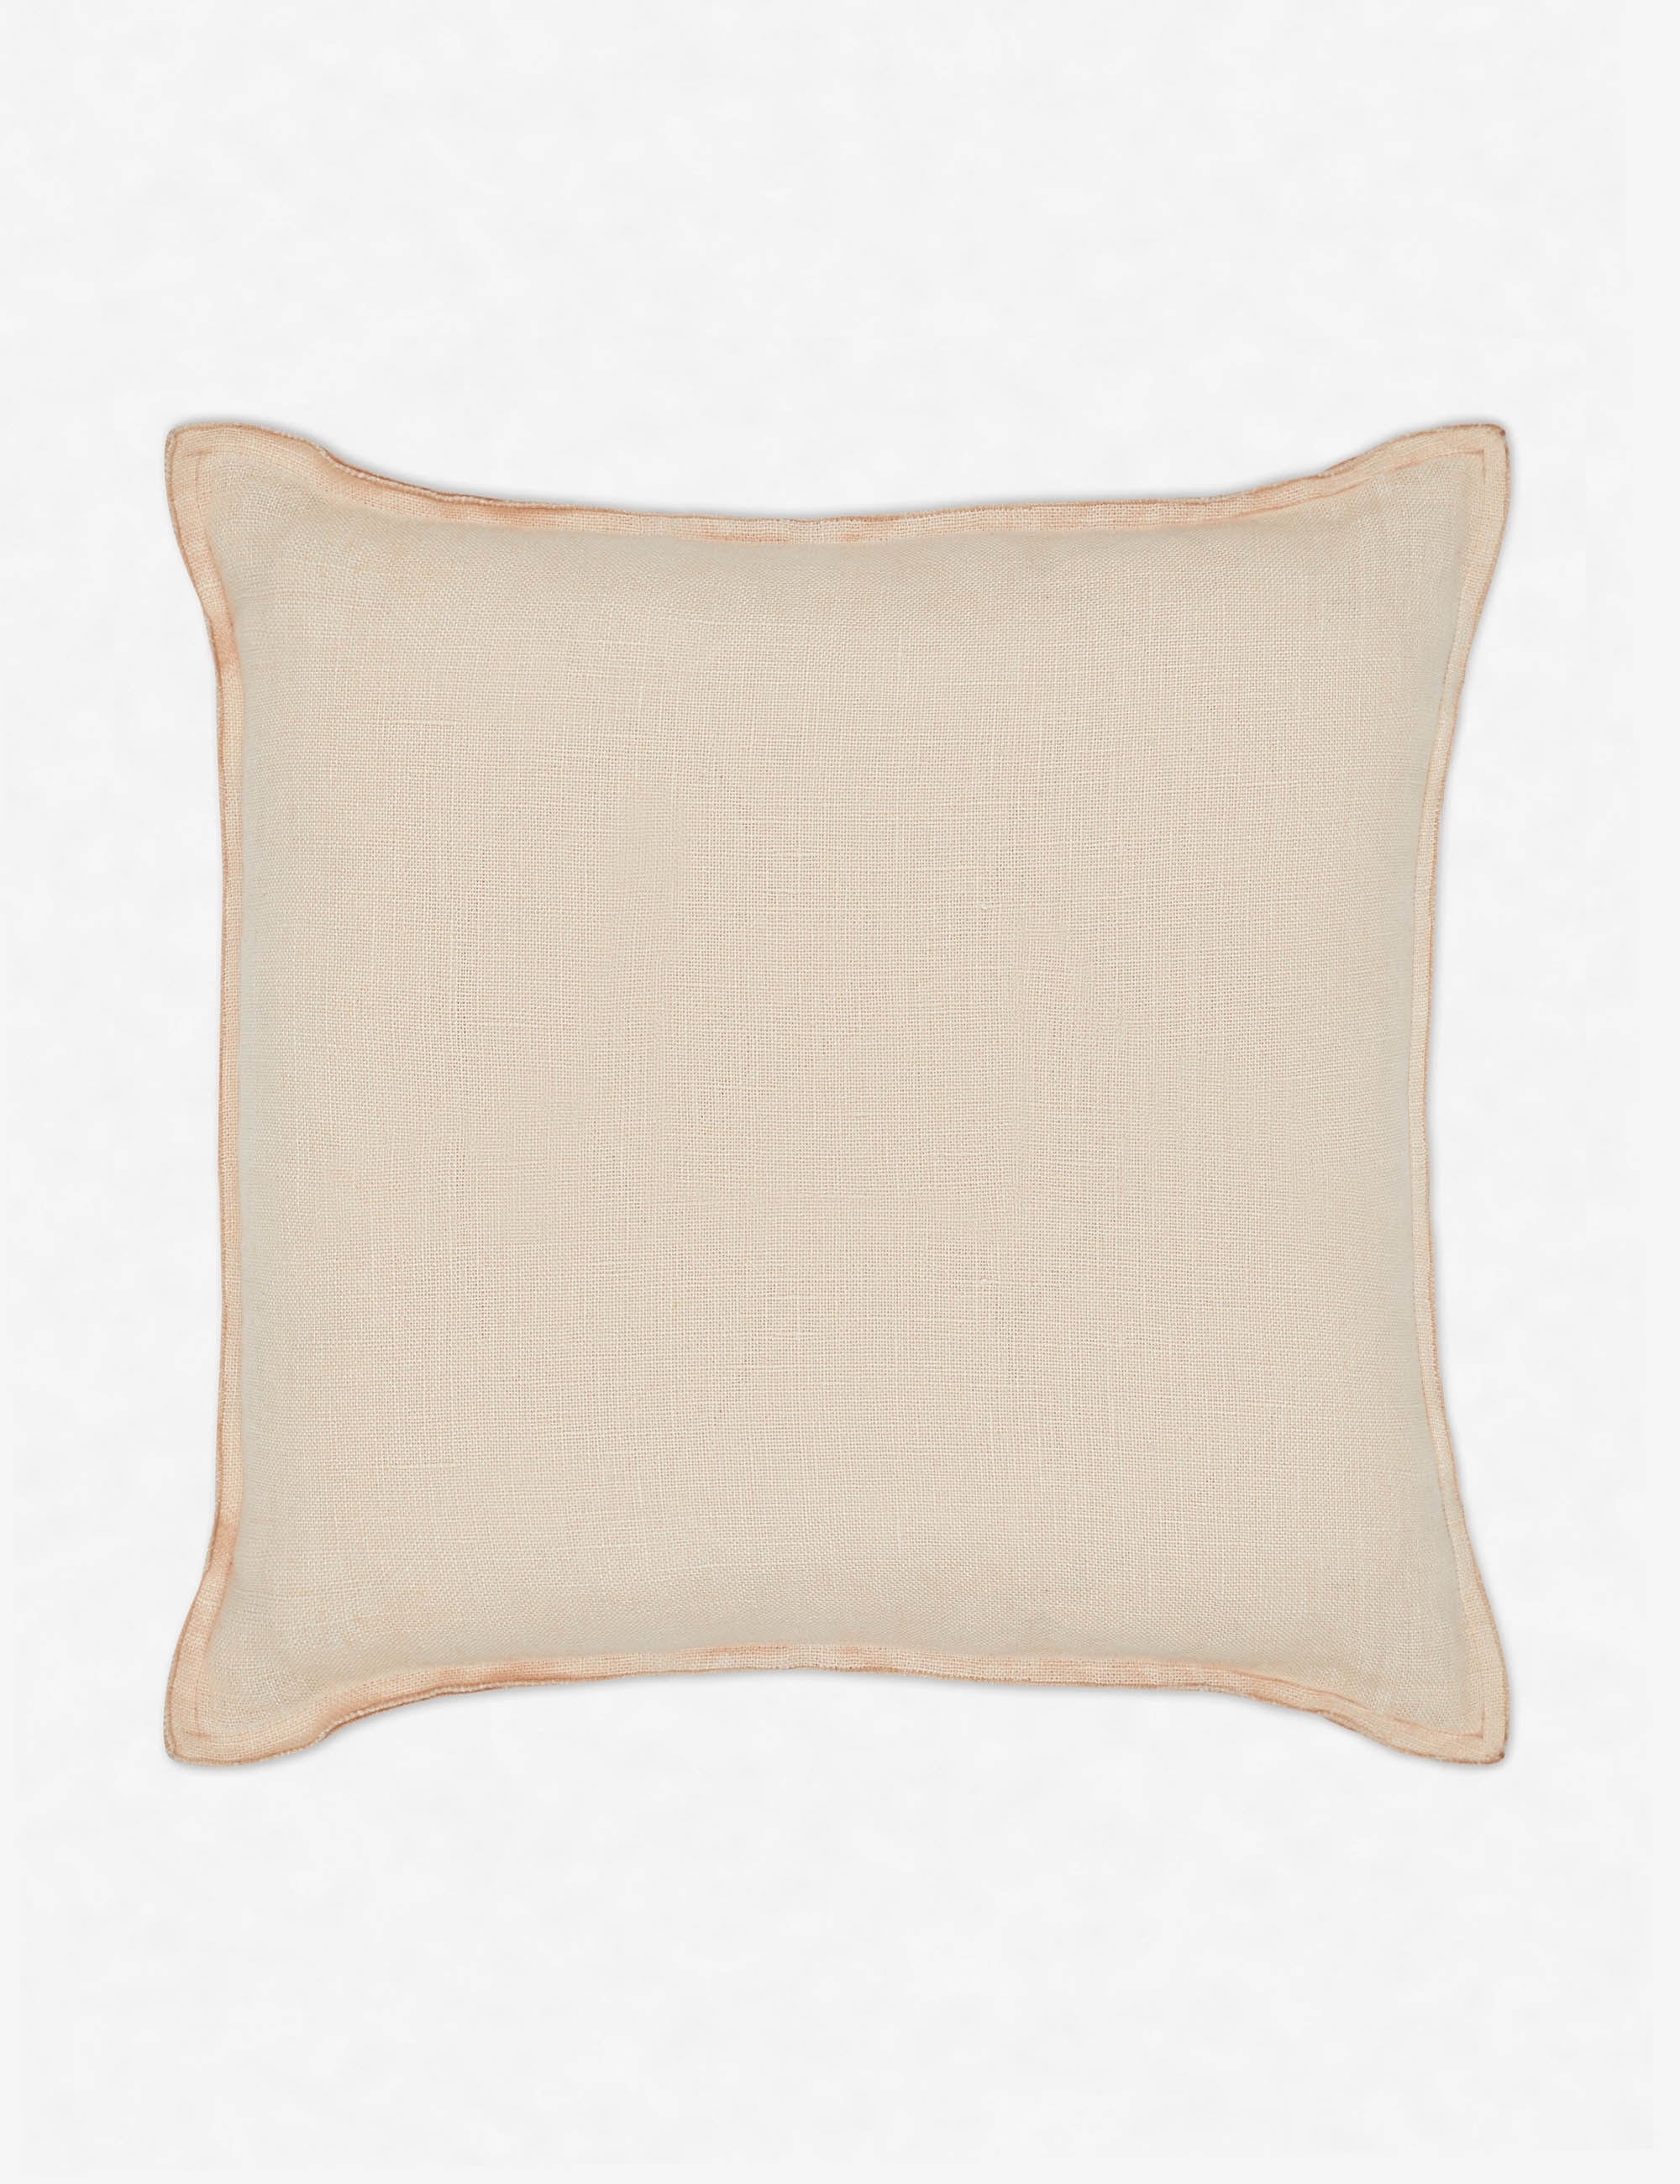 Arlo Linen Pillow, Blush - Image 0